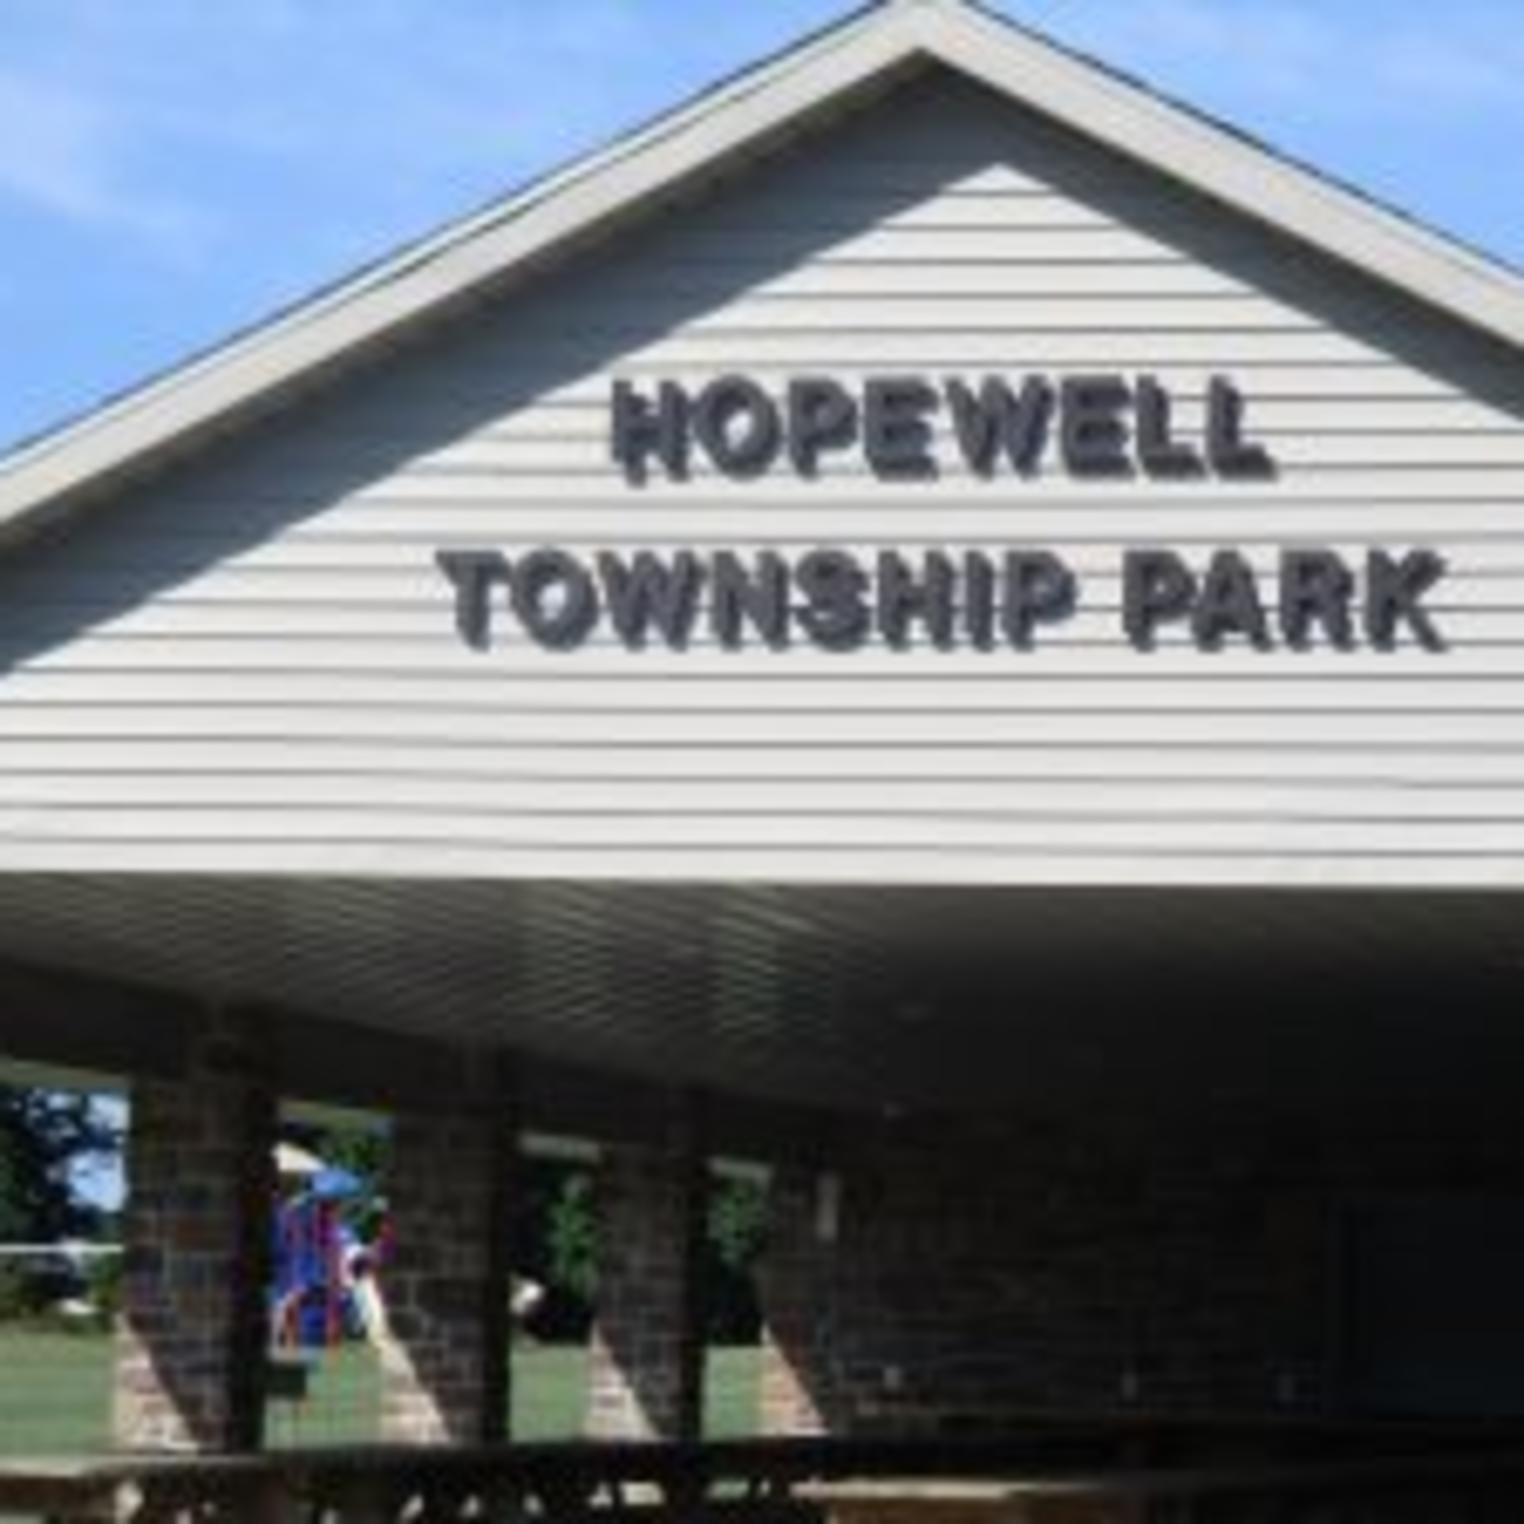 Hopewell Township Park